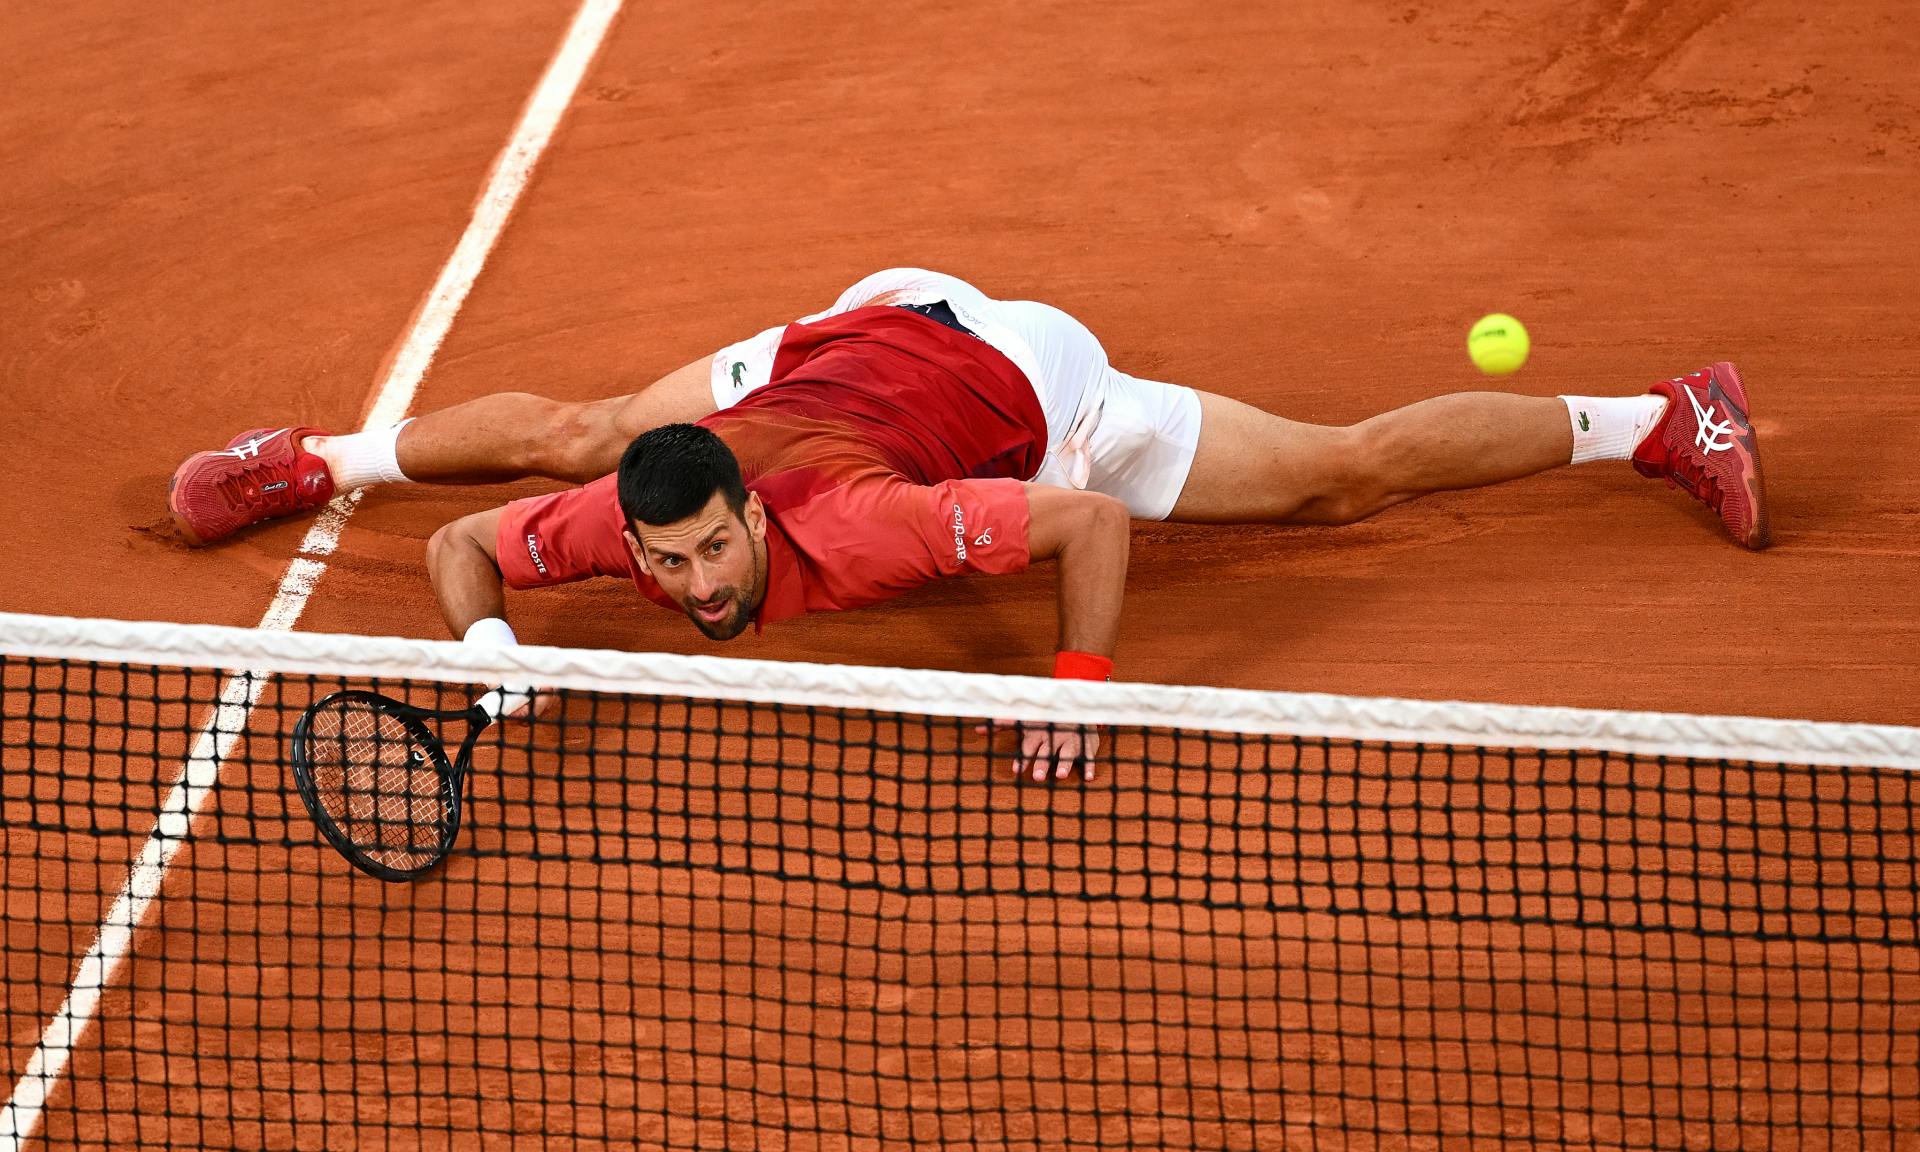 Novak Djokovic at the French Open